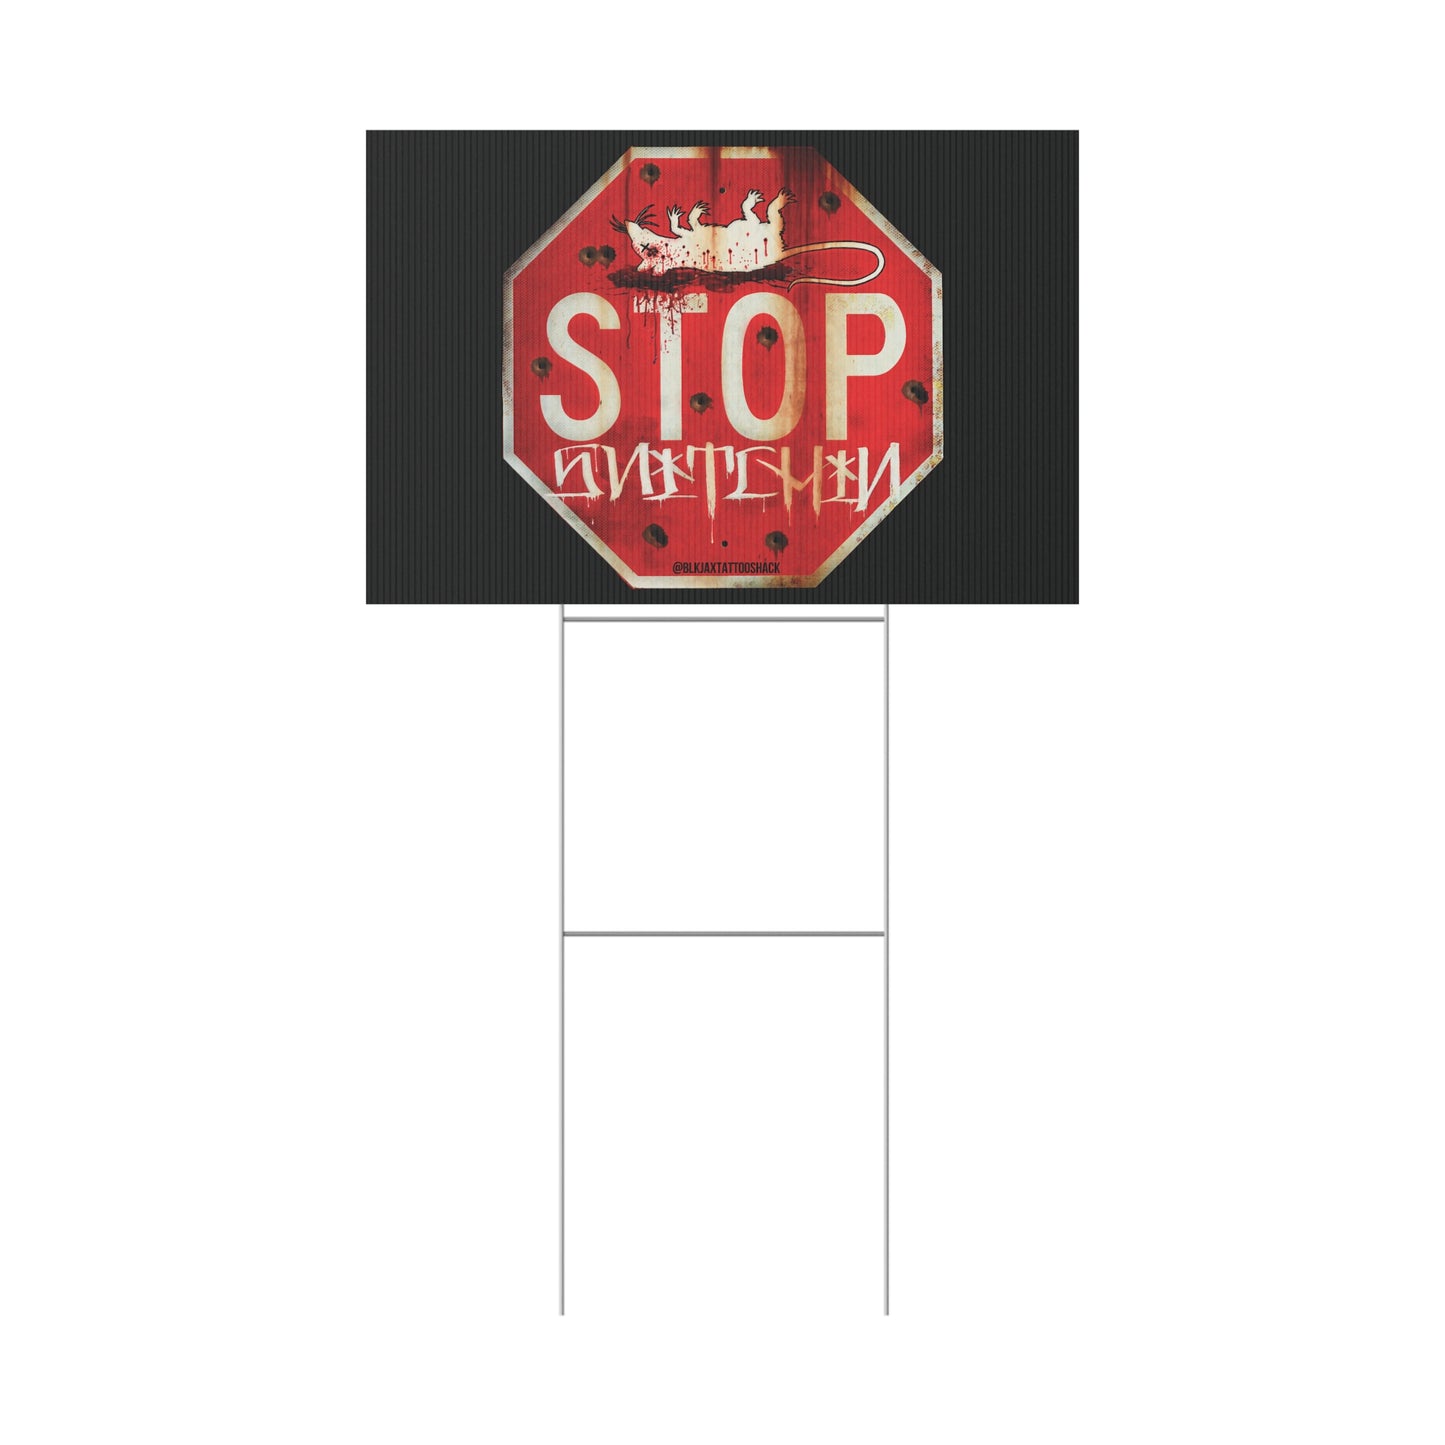 OG Stop Snitchin Plastic Yard Sign